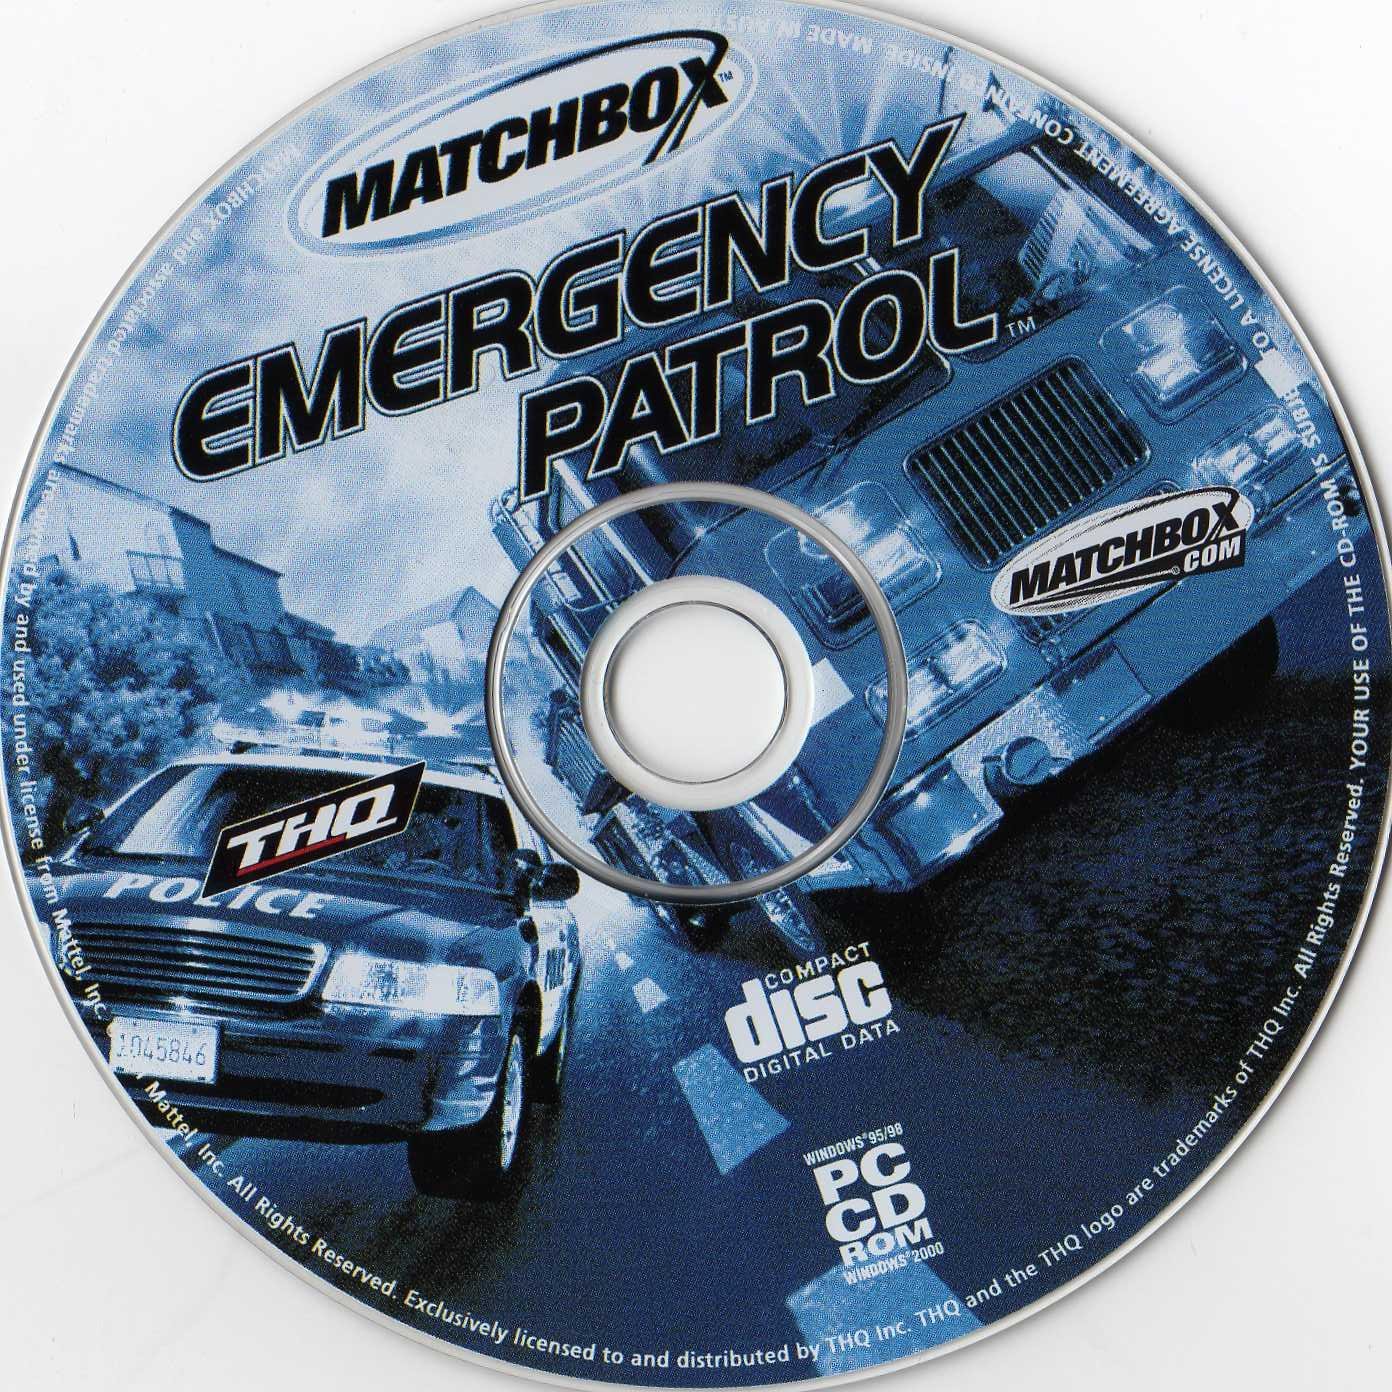 Image of Matchbox Emergency Patrol